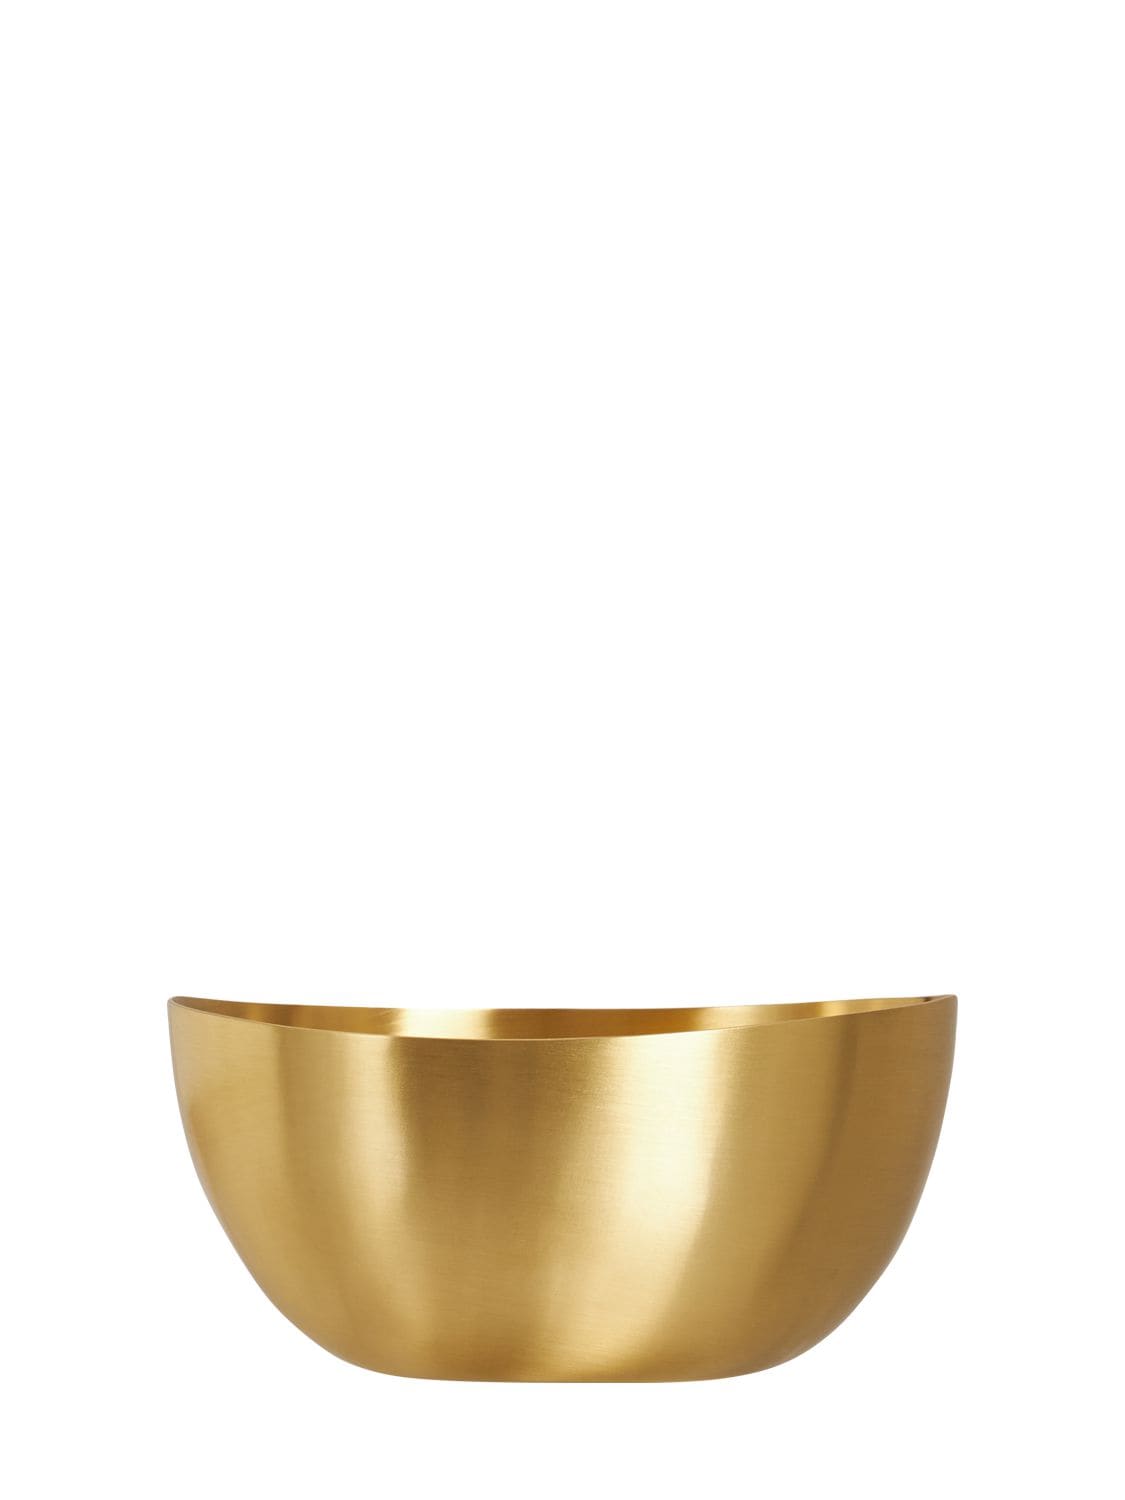 Armani/casa Ginger Bowl In Gold